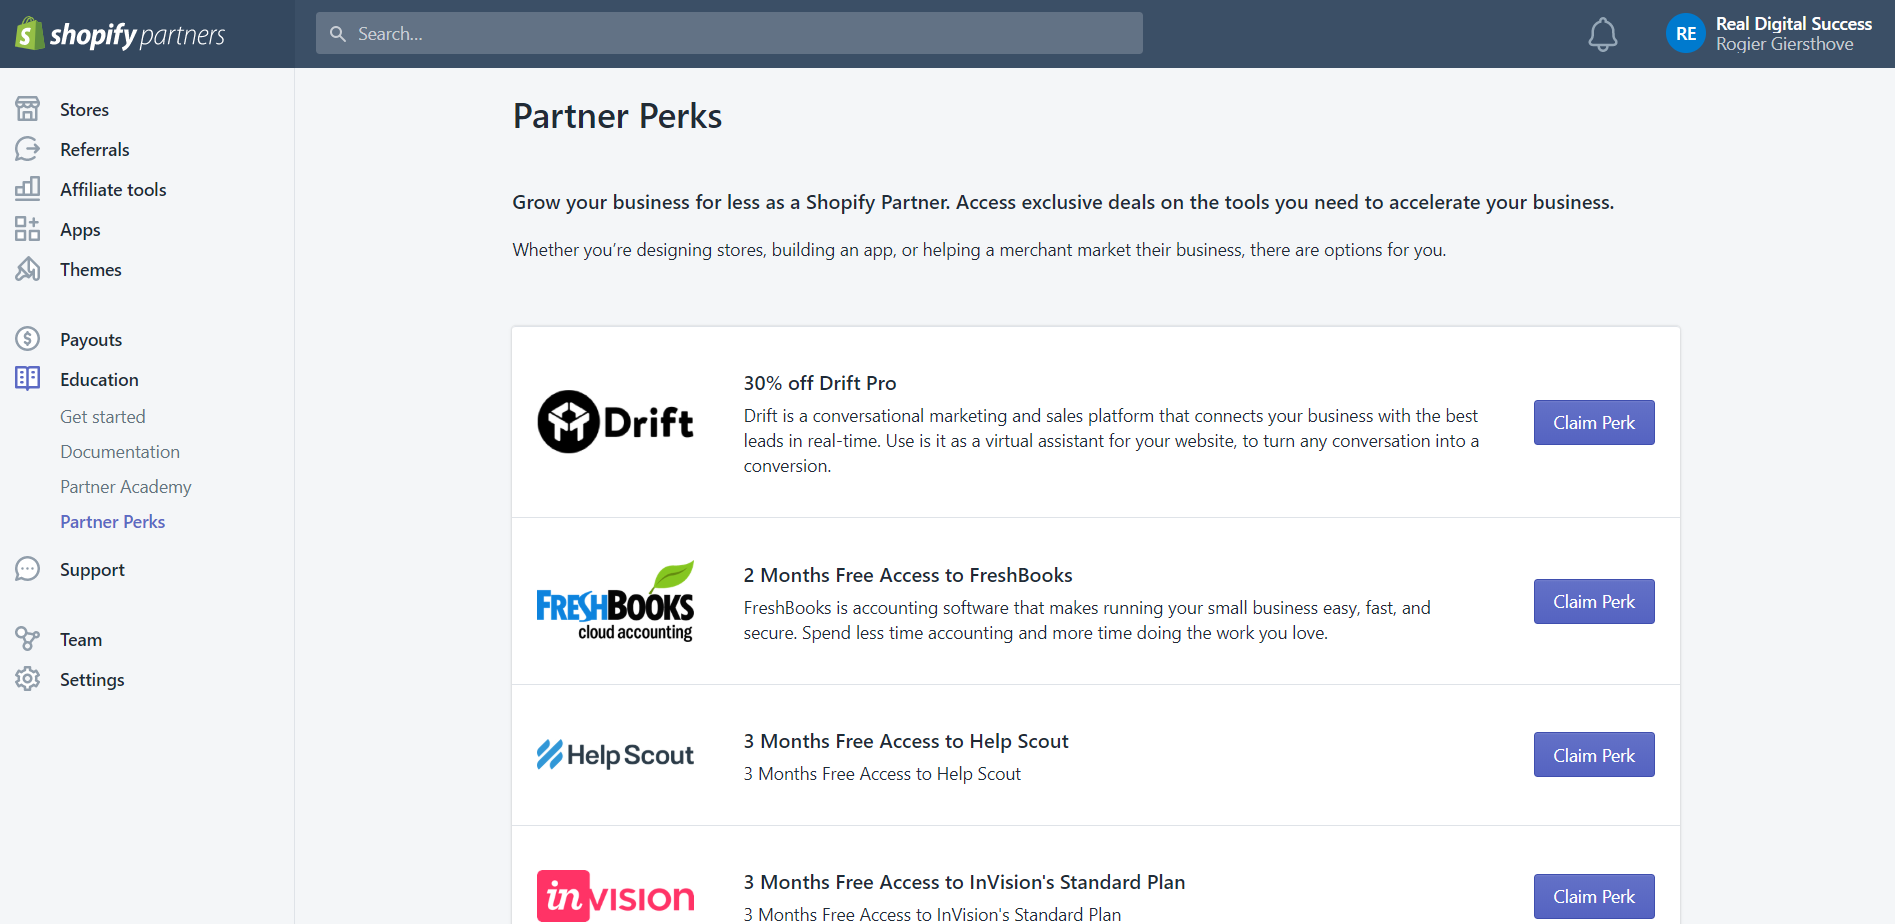 Shopify Partner Perks